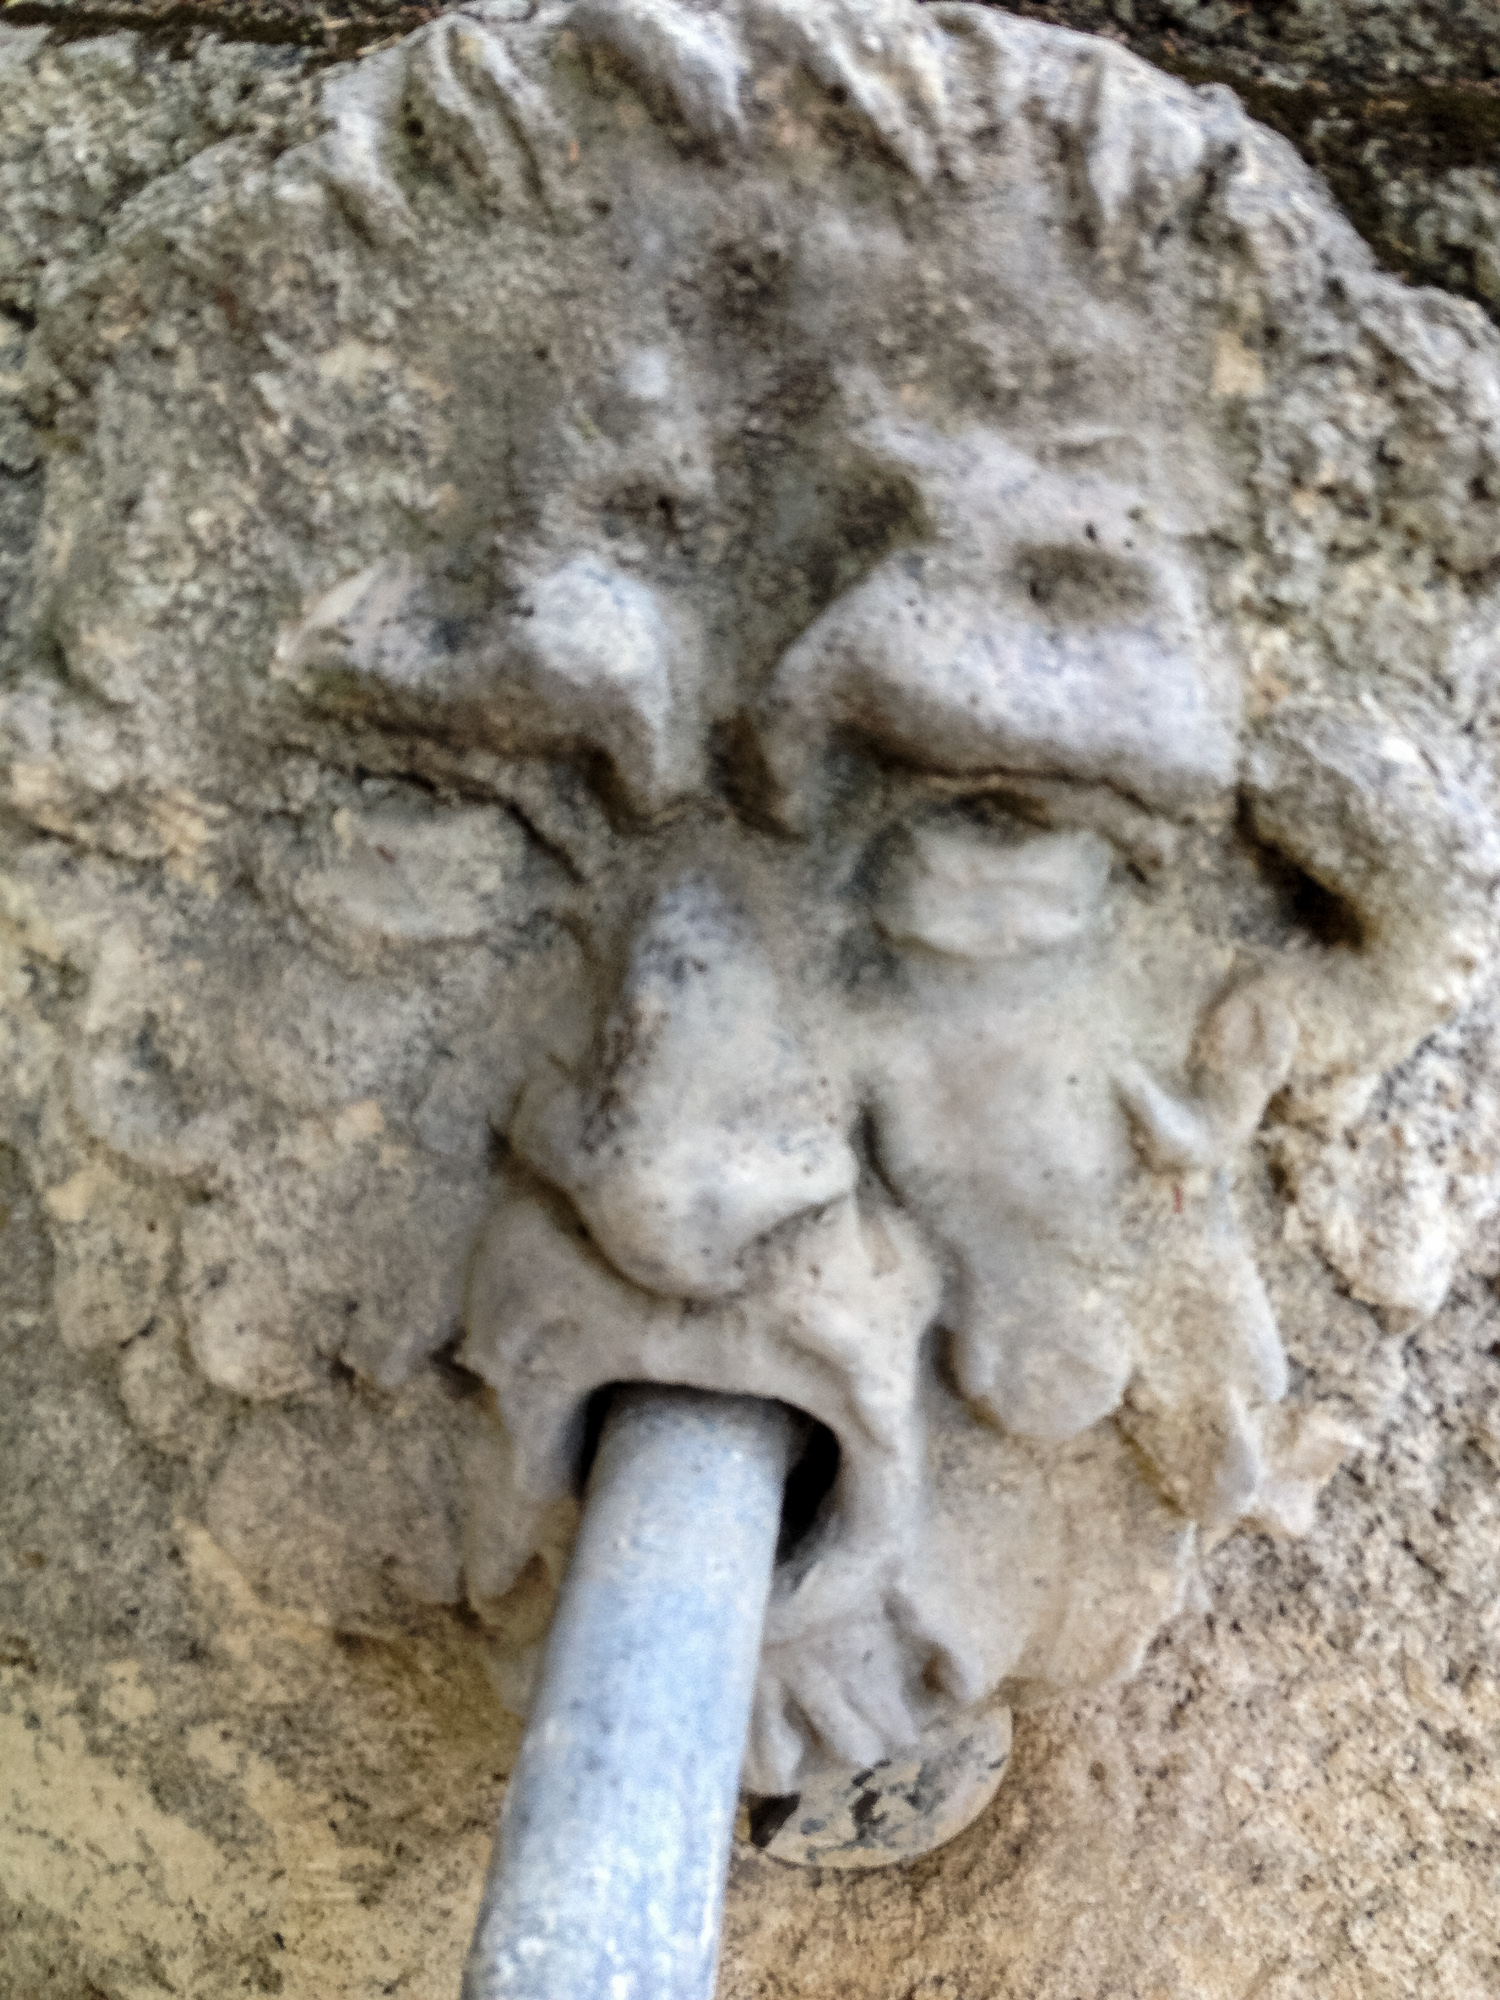 a concrete sculpture that looks like a man's head